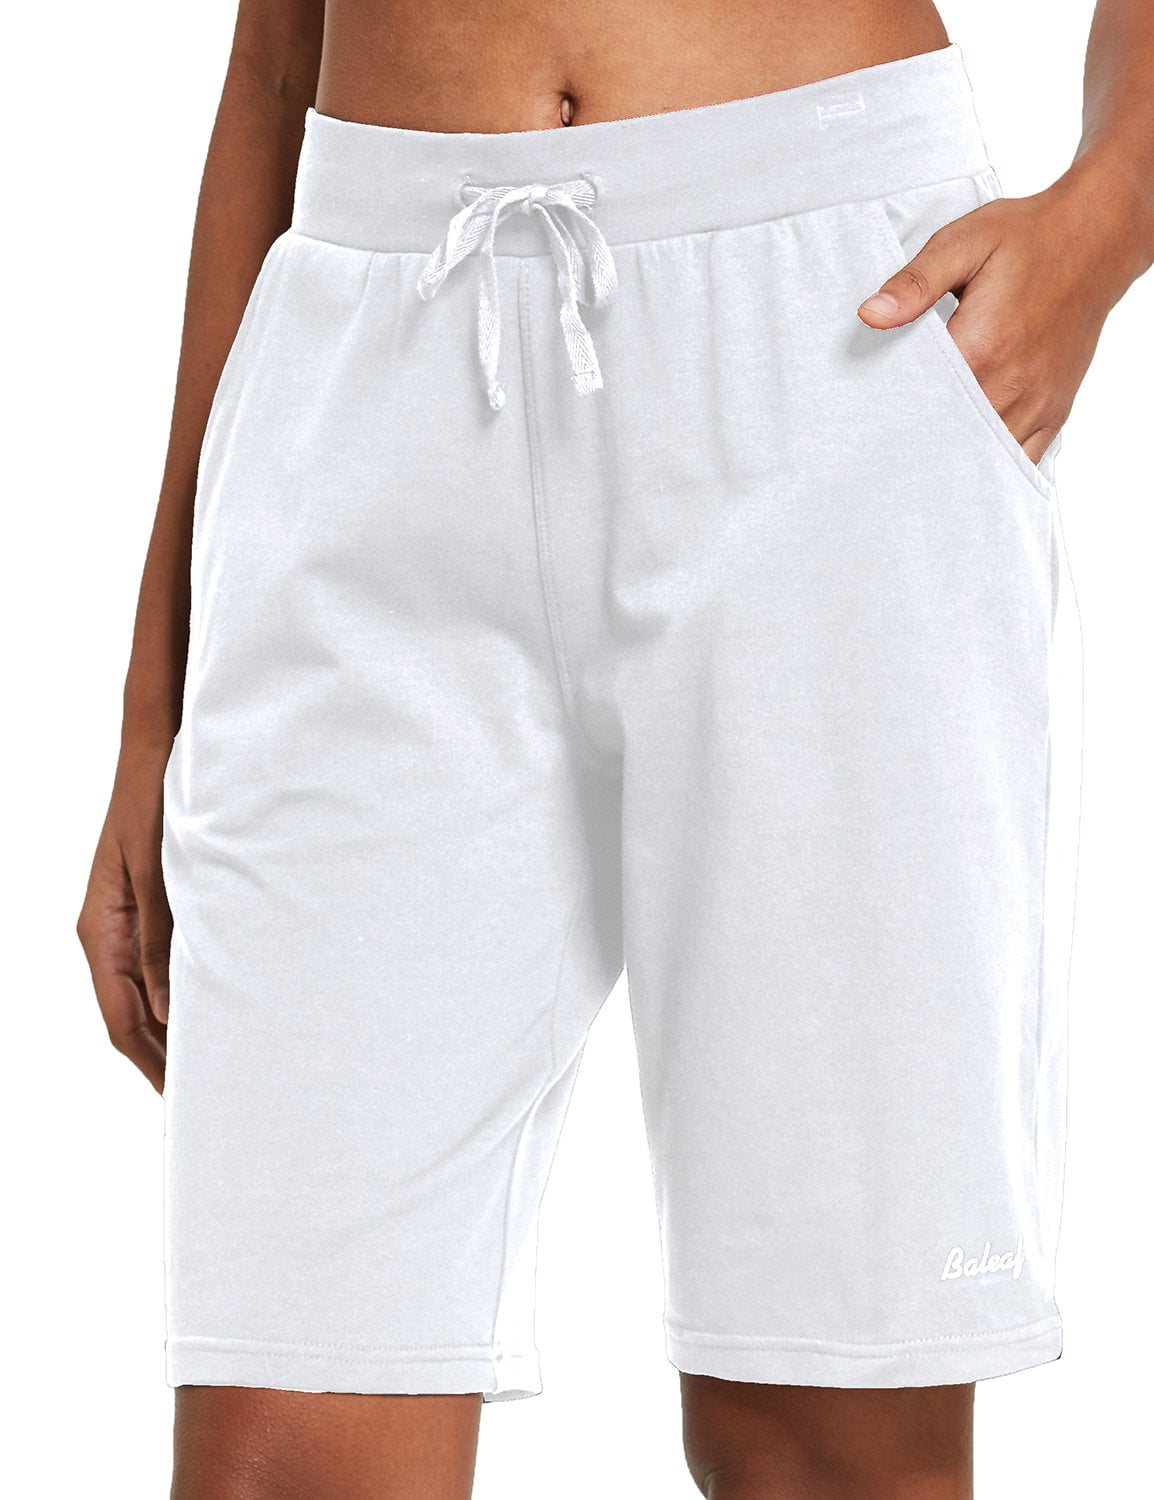 BALEAF Womens 10 Long Shorts Cotton Lounge Exercise Gym Workout Yoga Sweat Bermuda Knit Jersey Shorts Pockets 